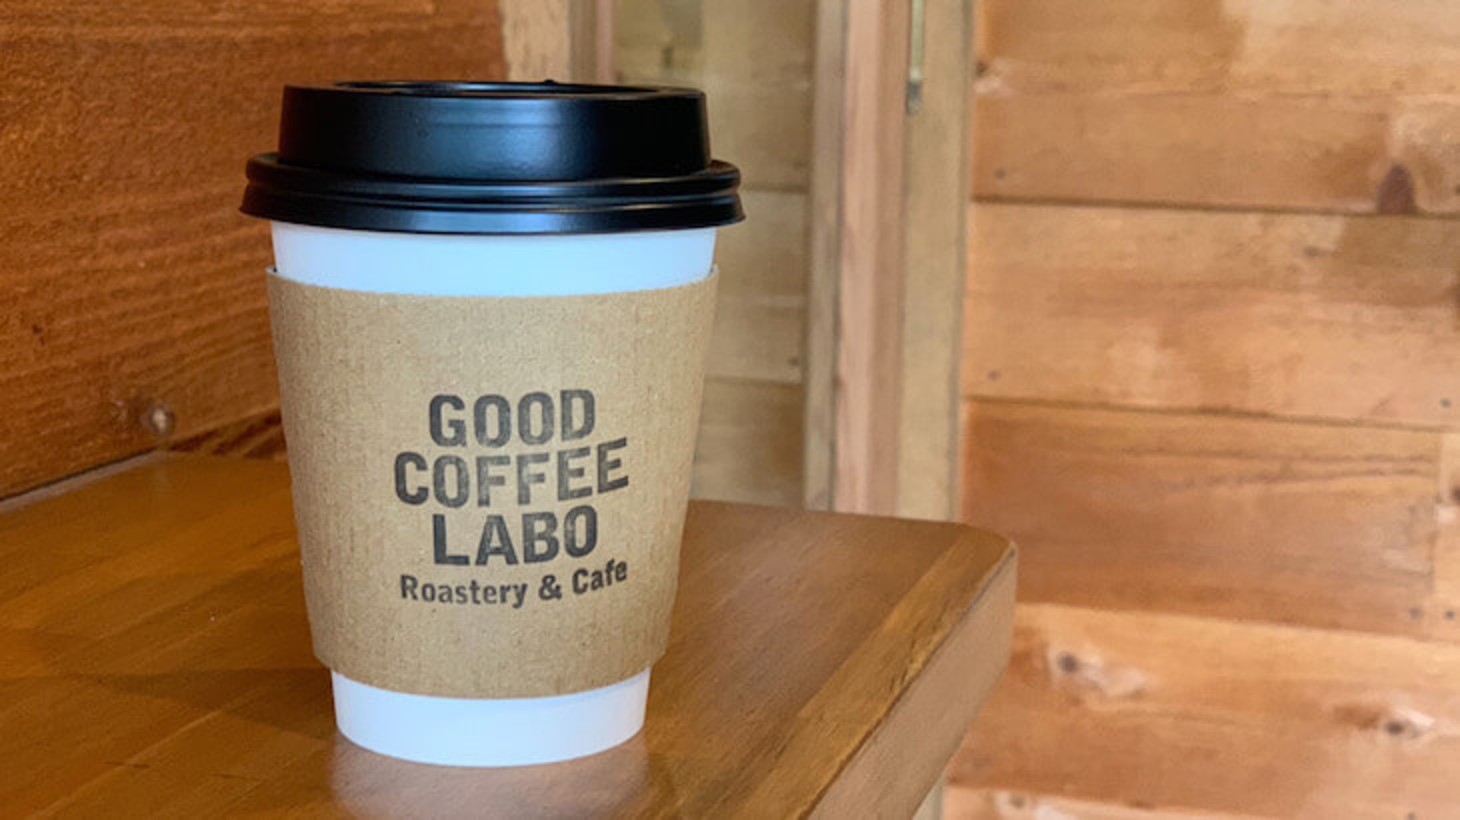 GOOD COFFEE LABO